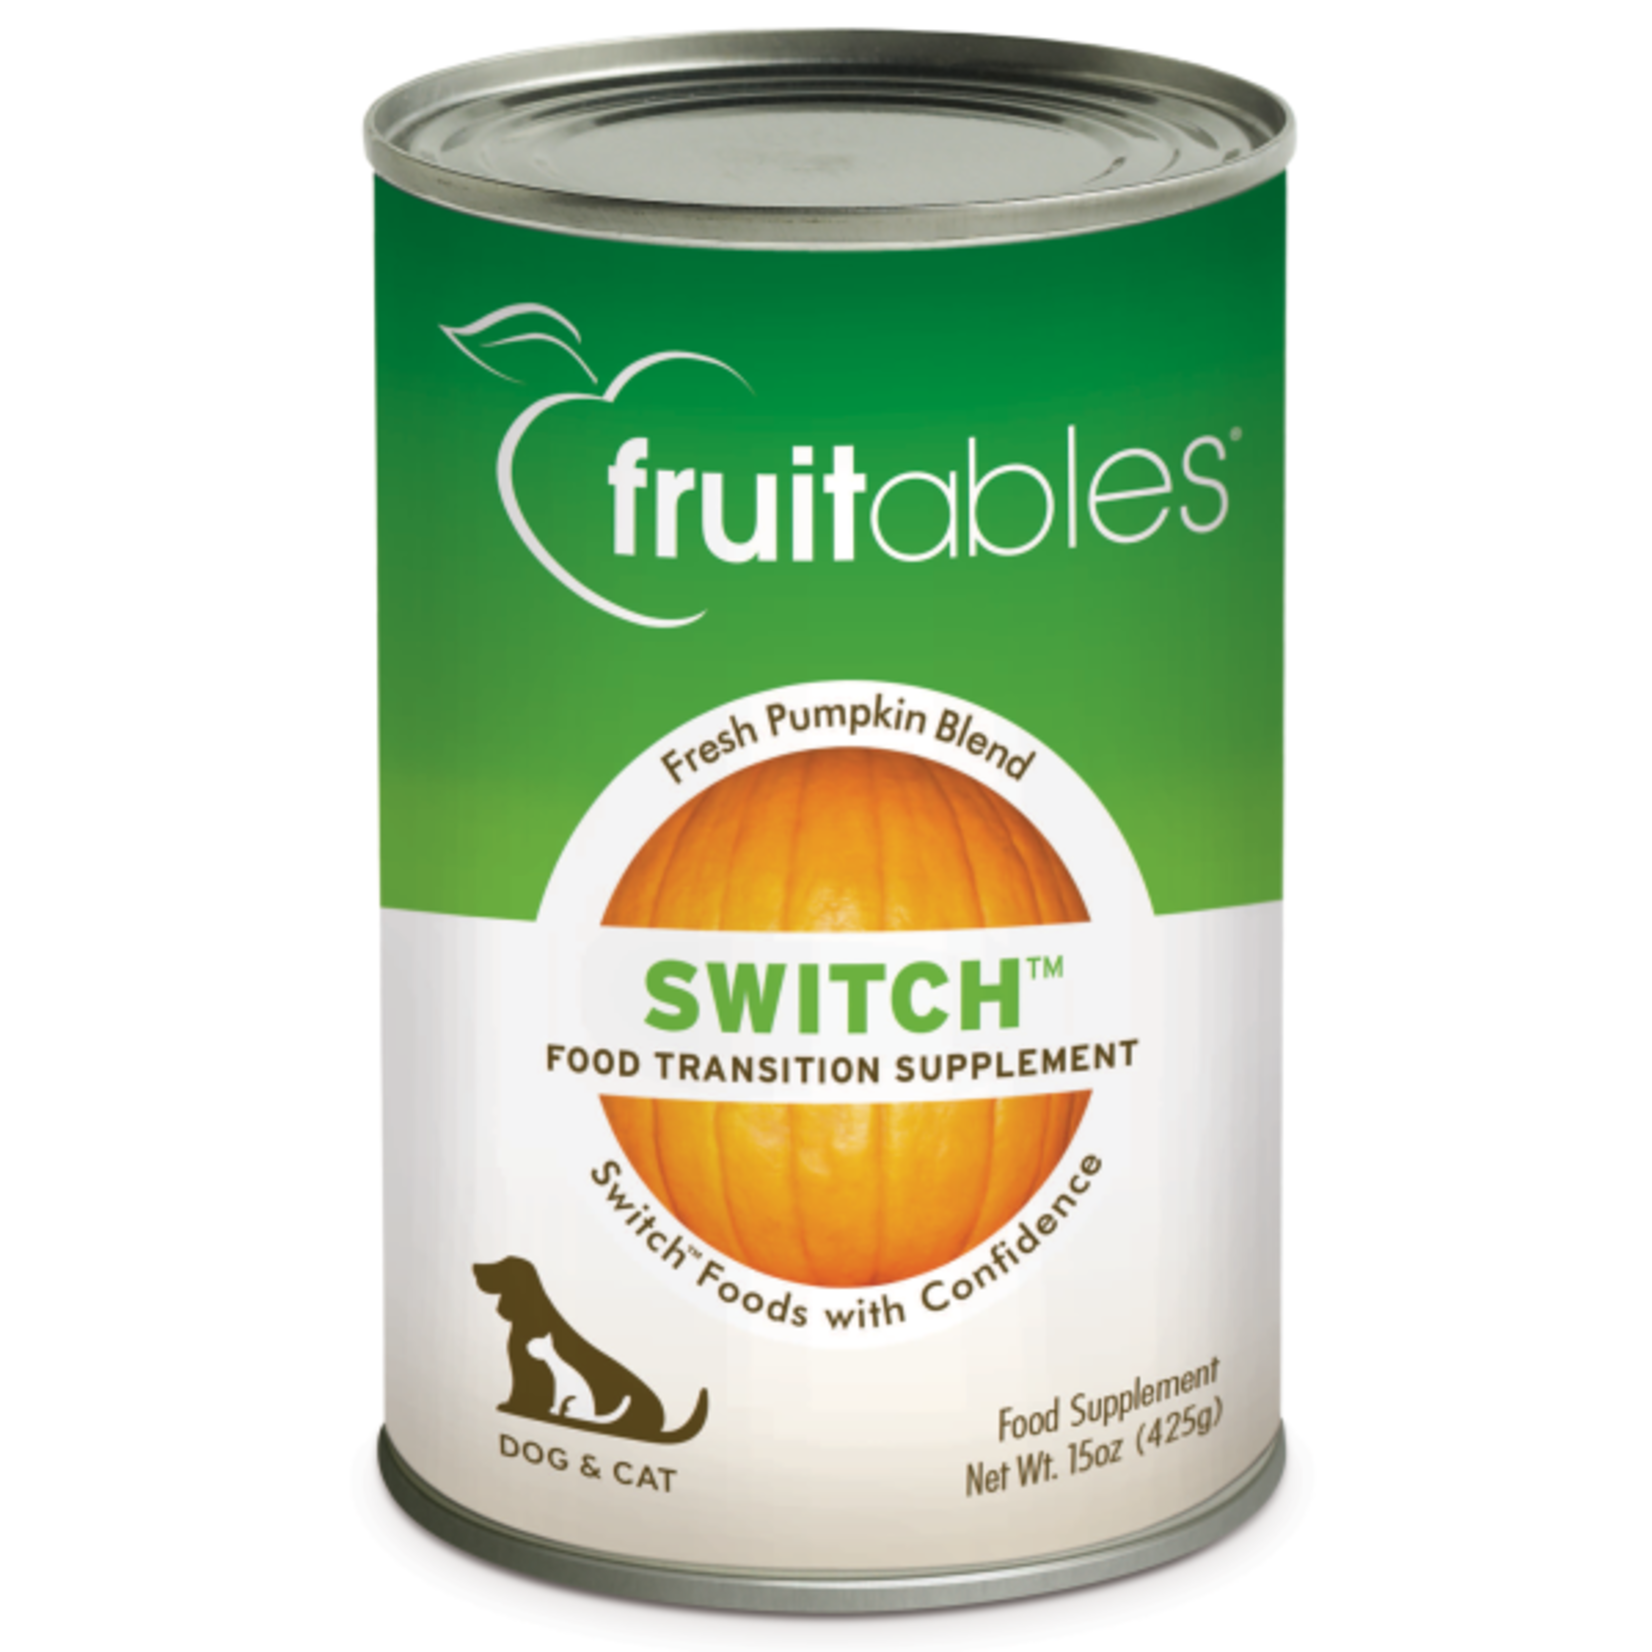 Fruitables Fruitables Switch Pumpkin Blend 15oz